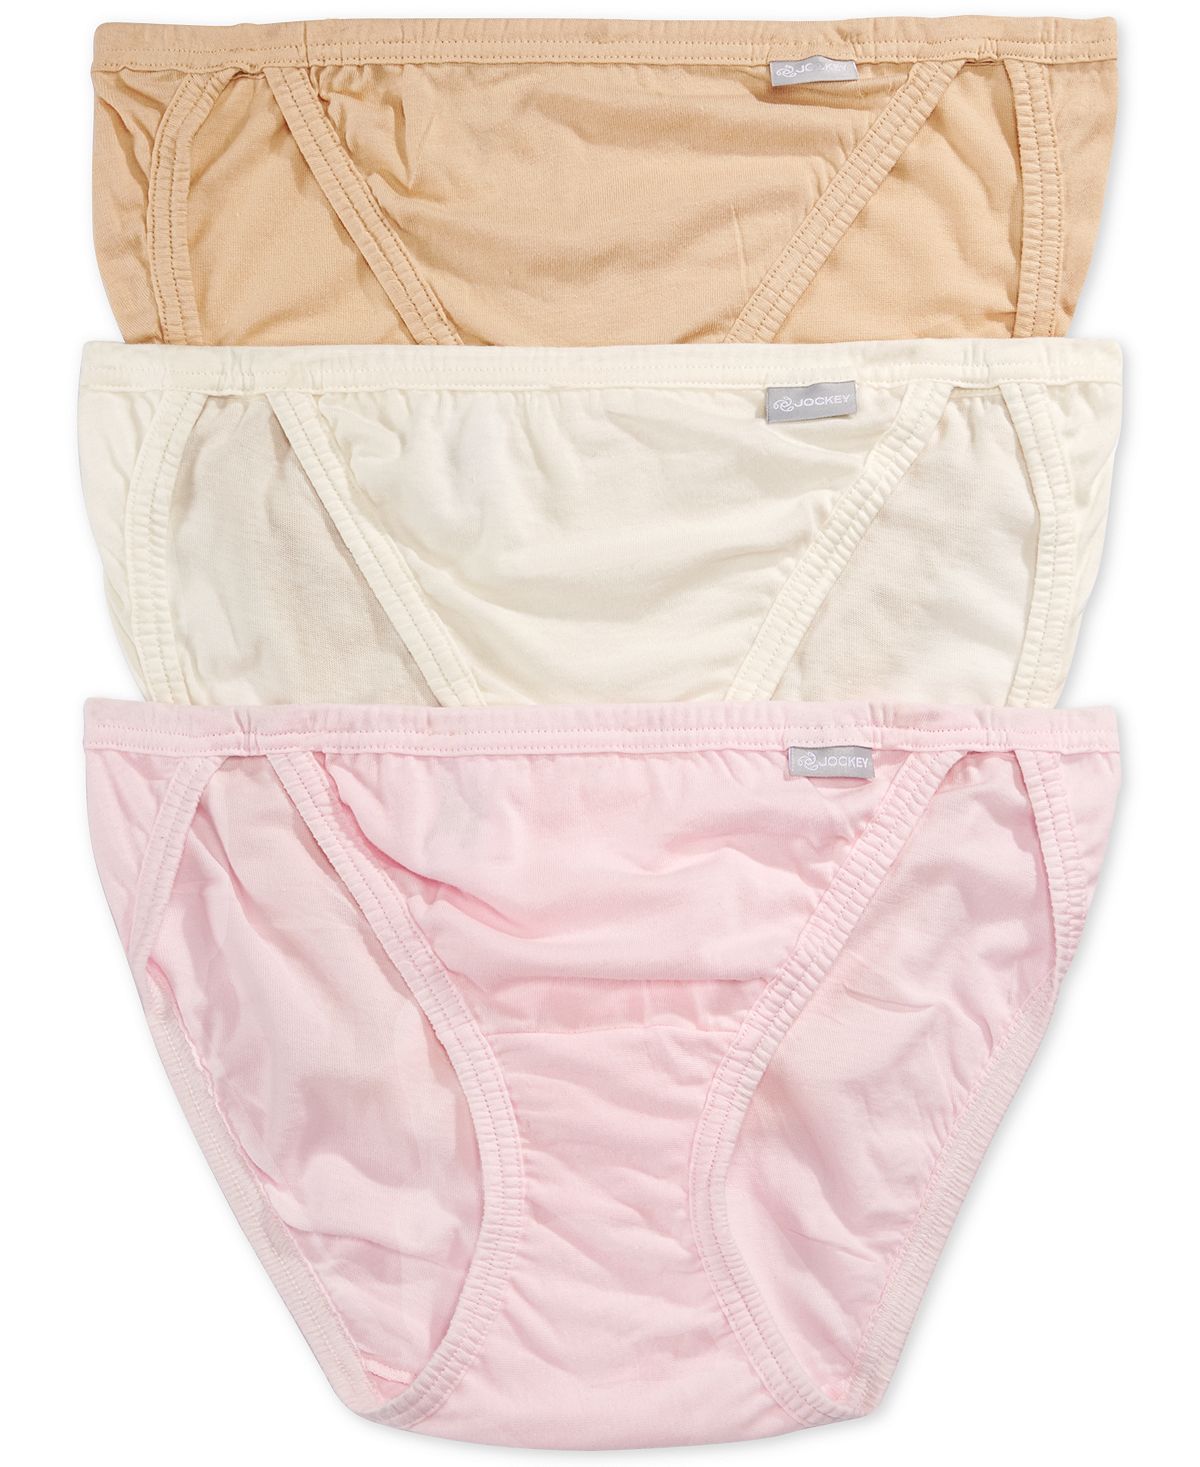 Jockey Women's Underwear Classic Brief - 3 Pack, Ivory, 5 at